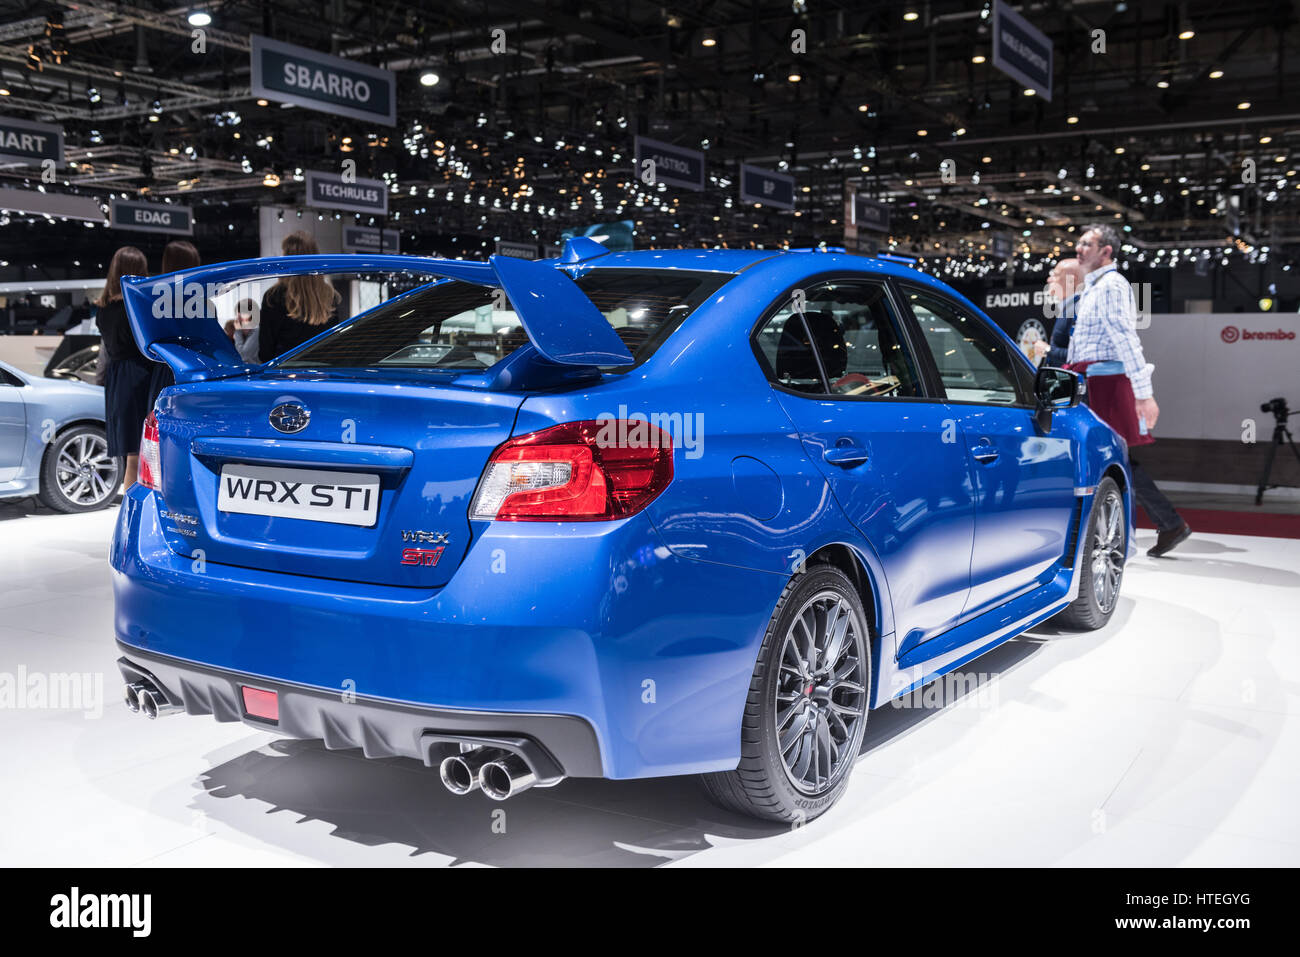 The Subaru wrx sti 2017t the Geneva, Switzerland international car and motor show Stock Photo